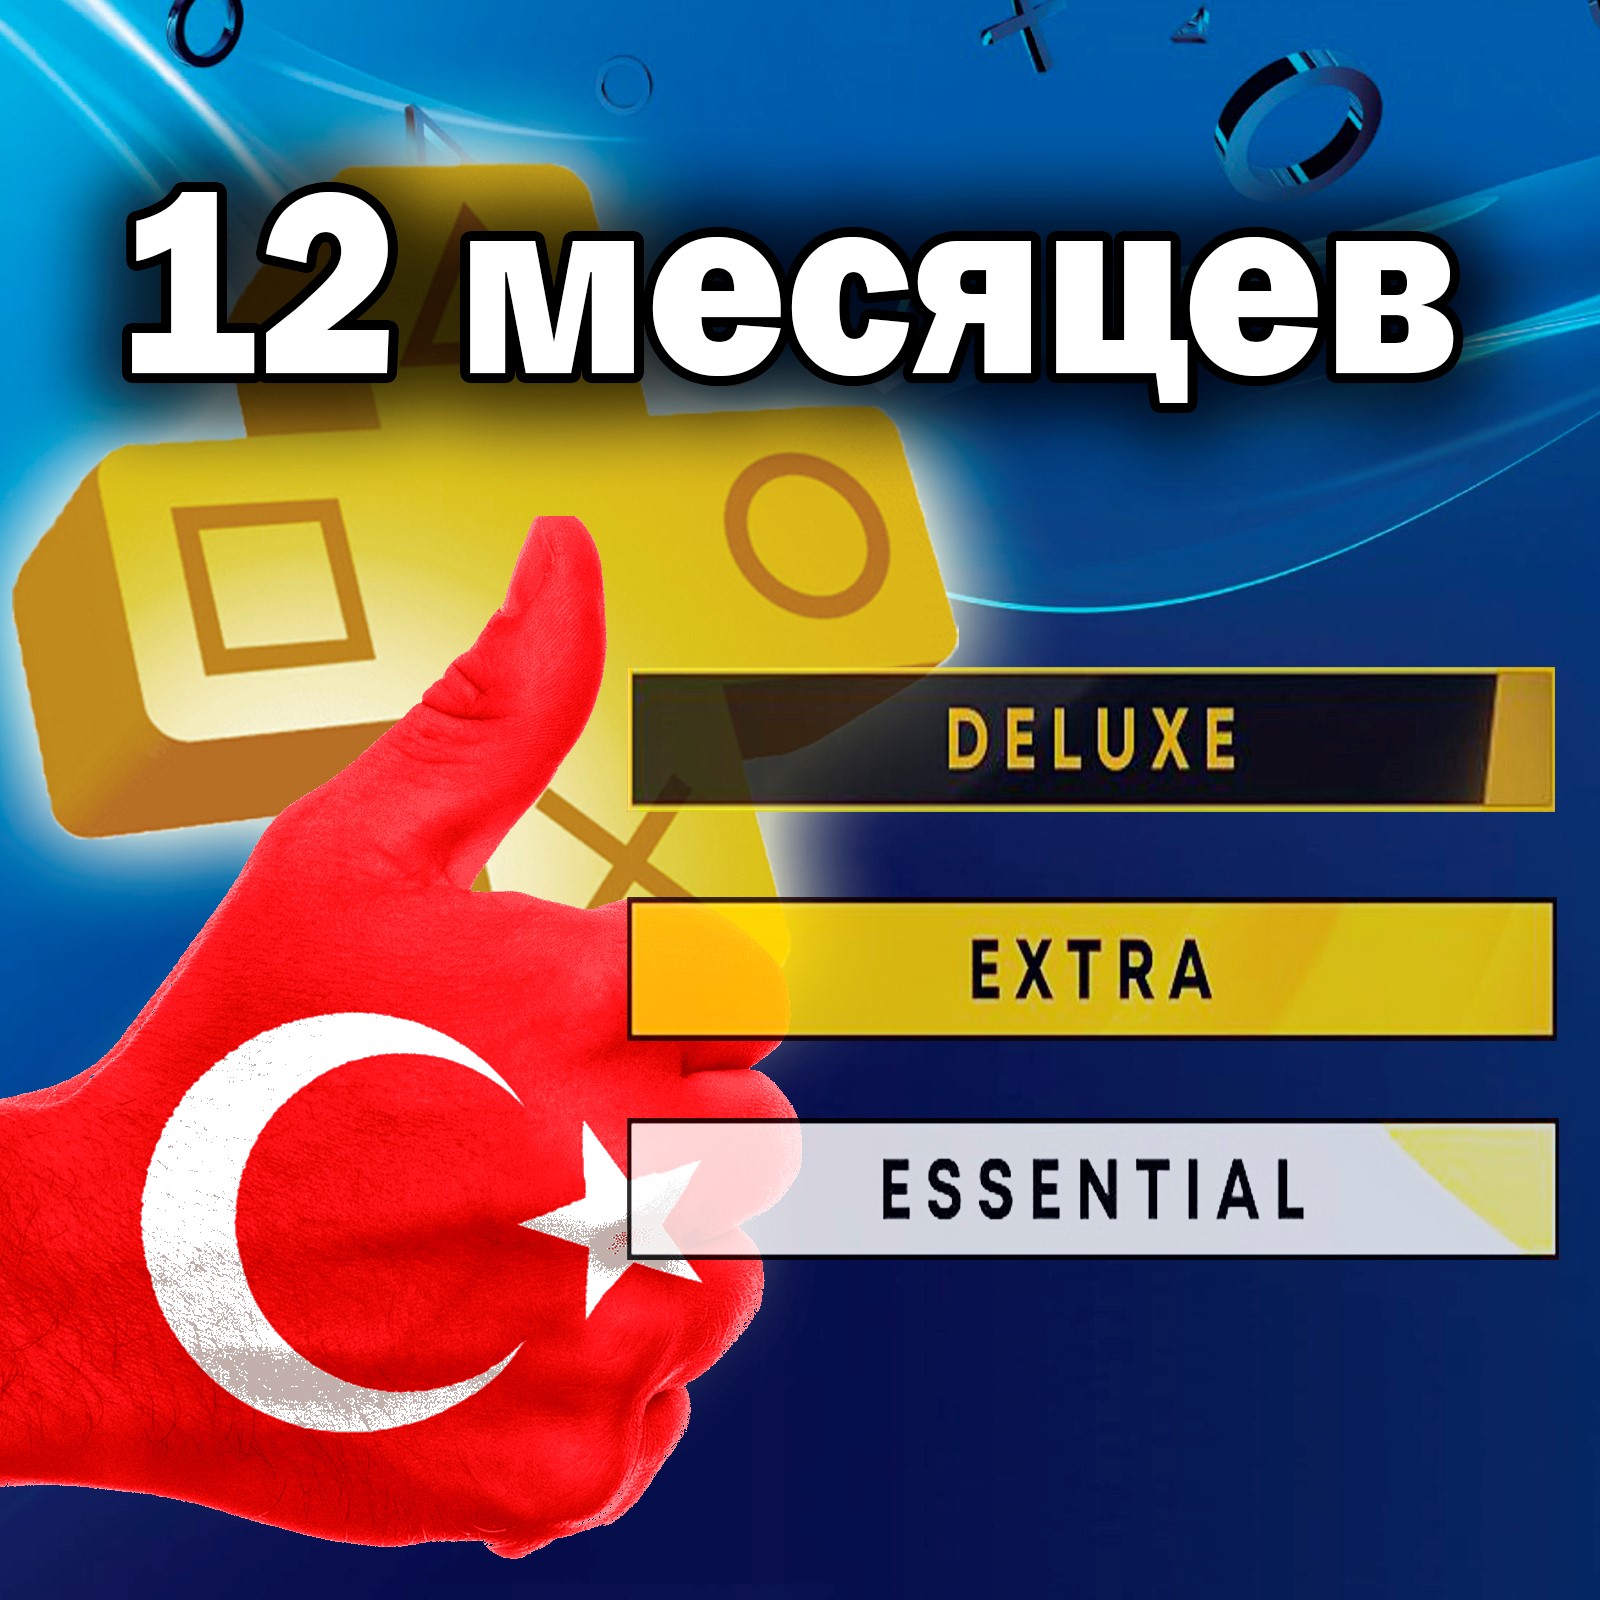 Playstation turkey ps plus. ПС плюс Турция подписка Экстра. Подписка PS Plus Турция. Подписка PS Plus Extra. Подписка PS Plus Deluxe Турция.